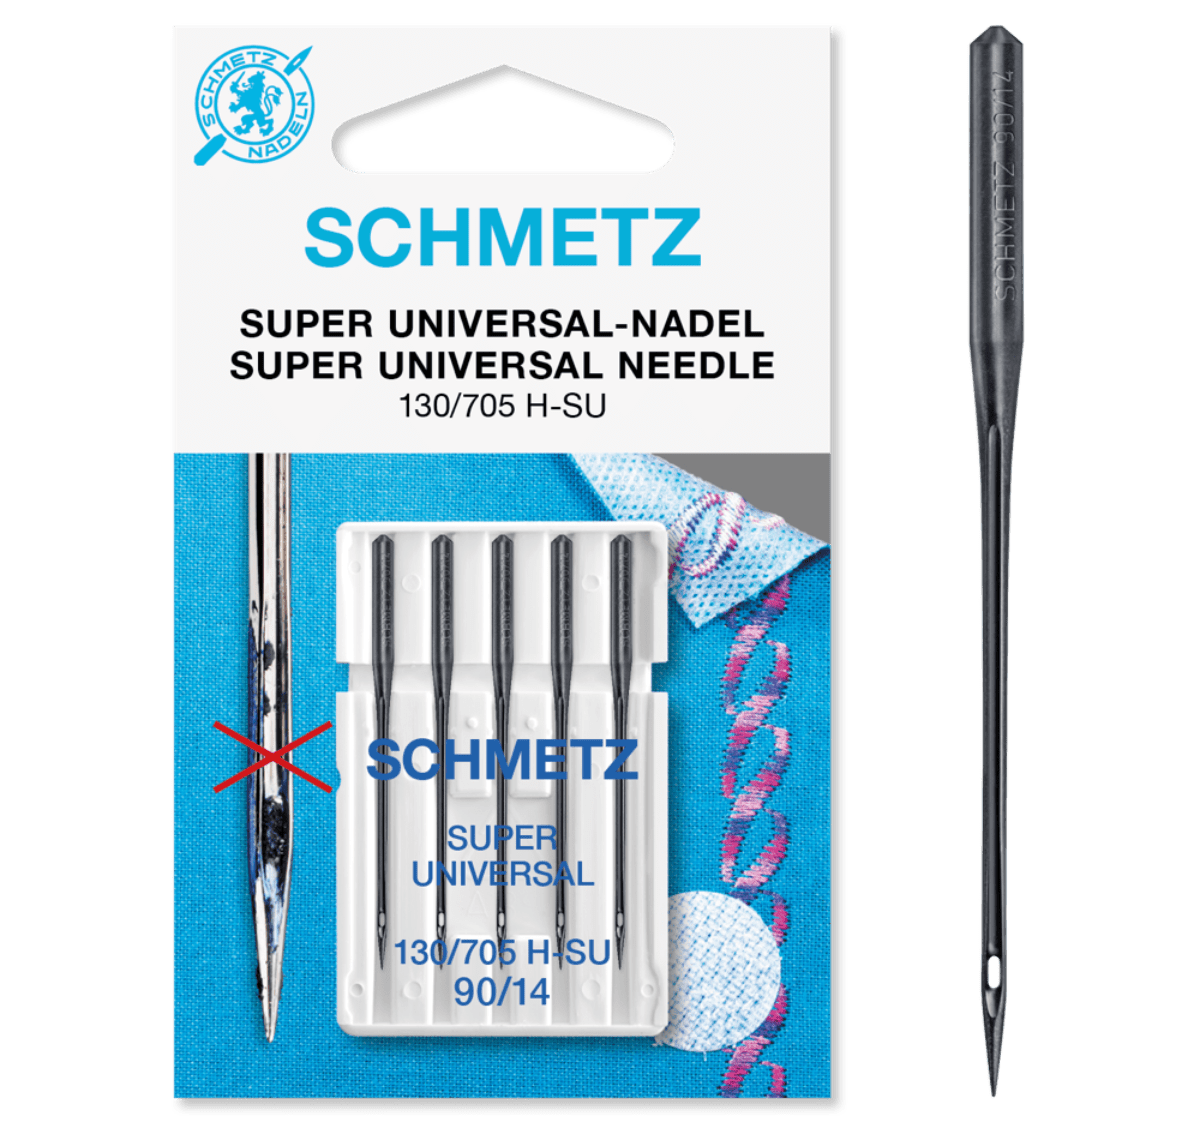 Schmetz Super Universal Nadeln 80 H - SU ST Nadel poshpinks